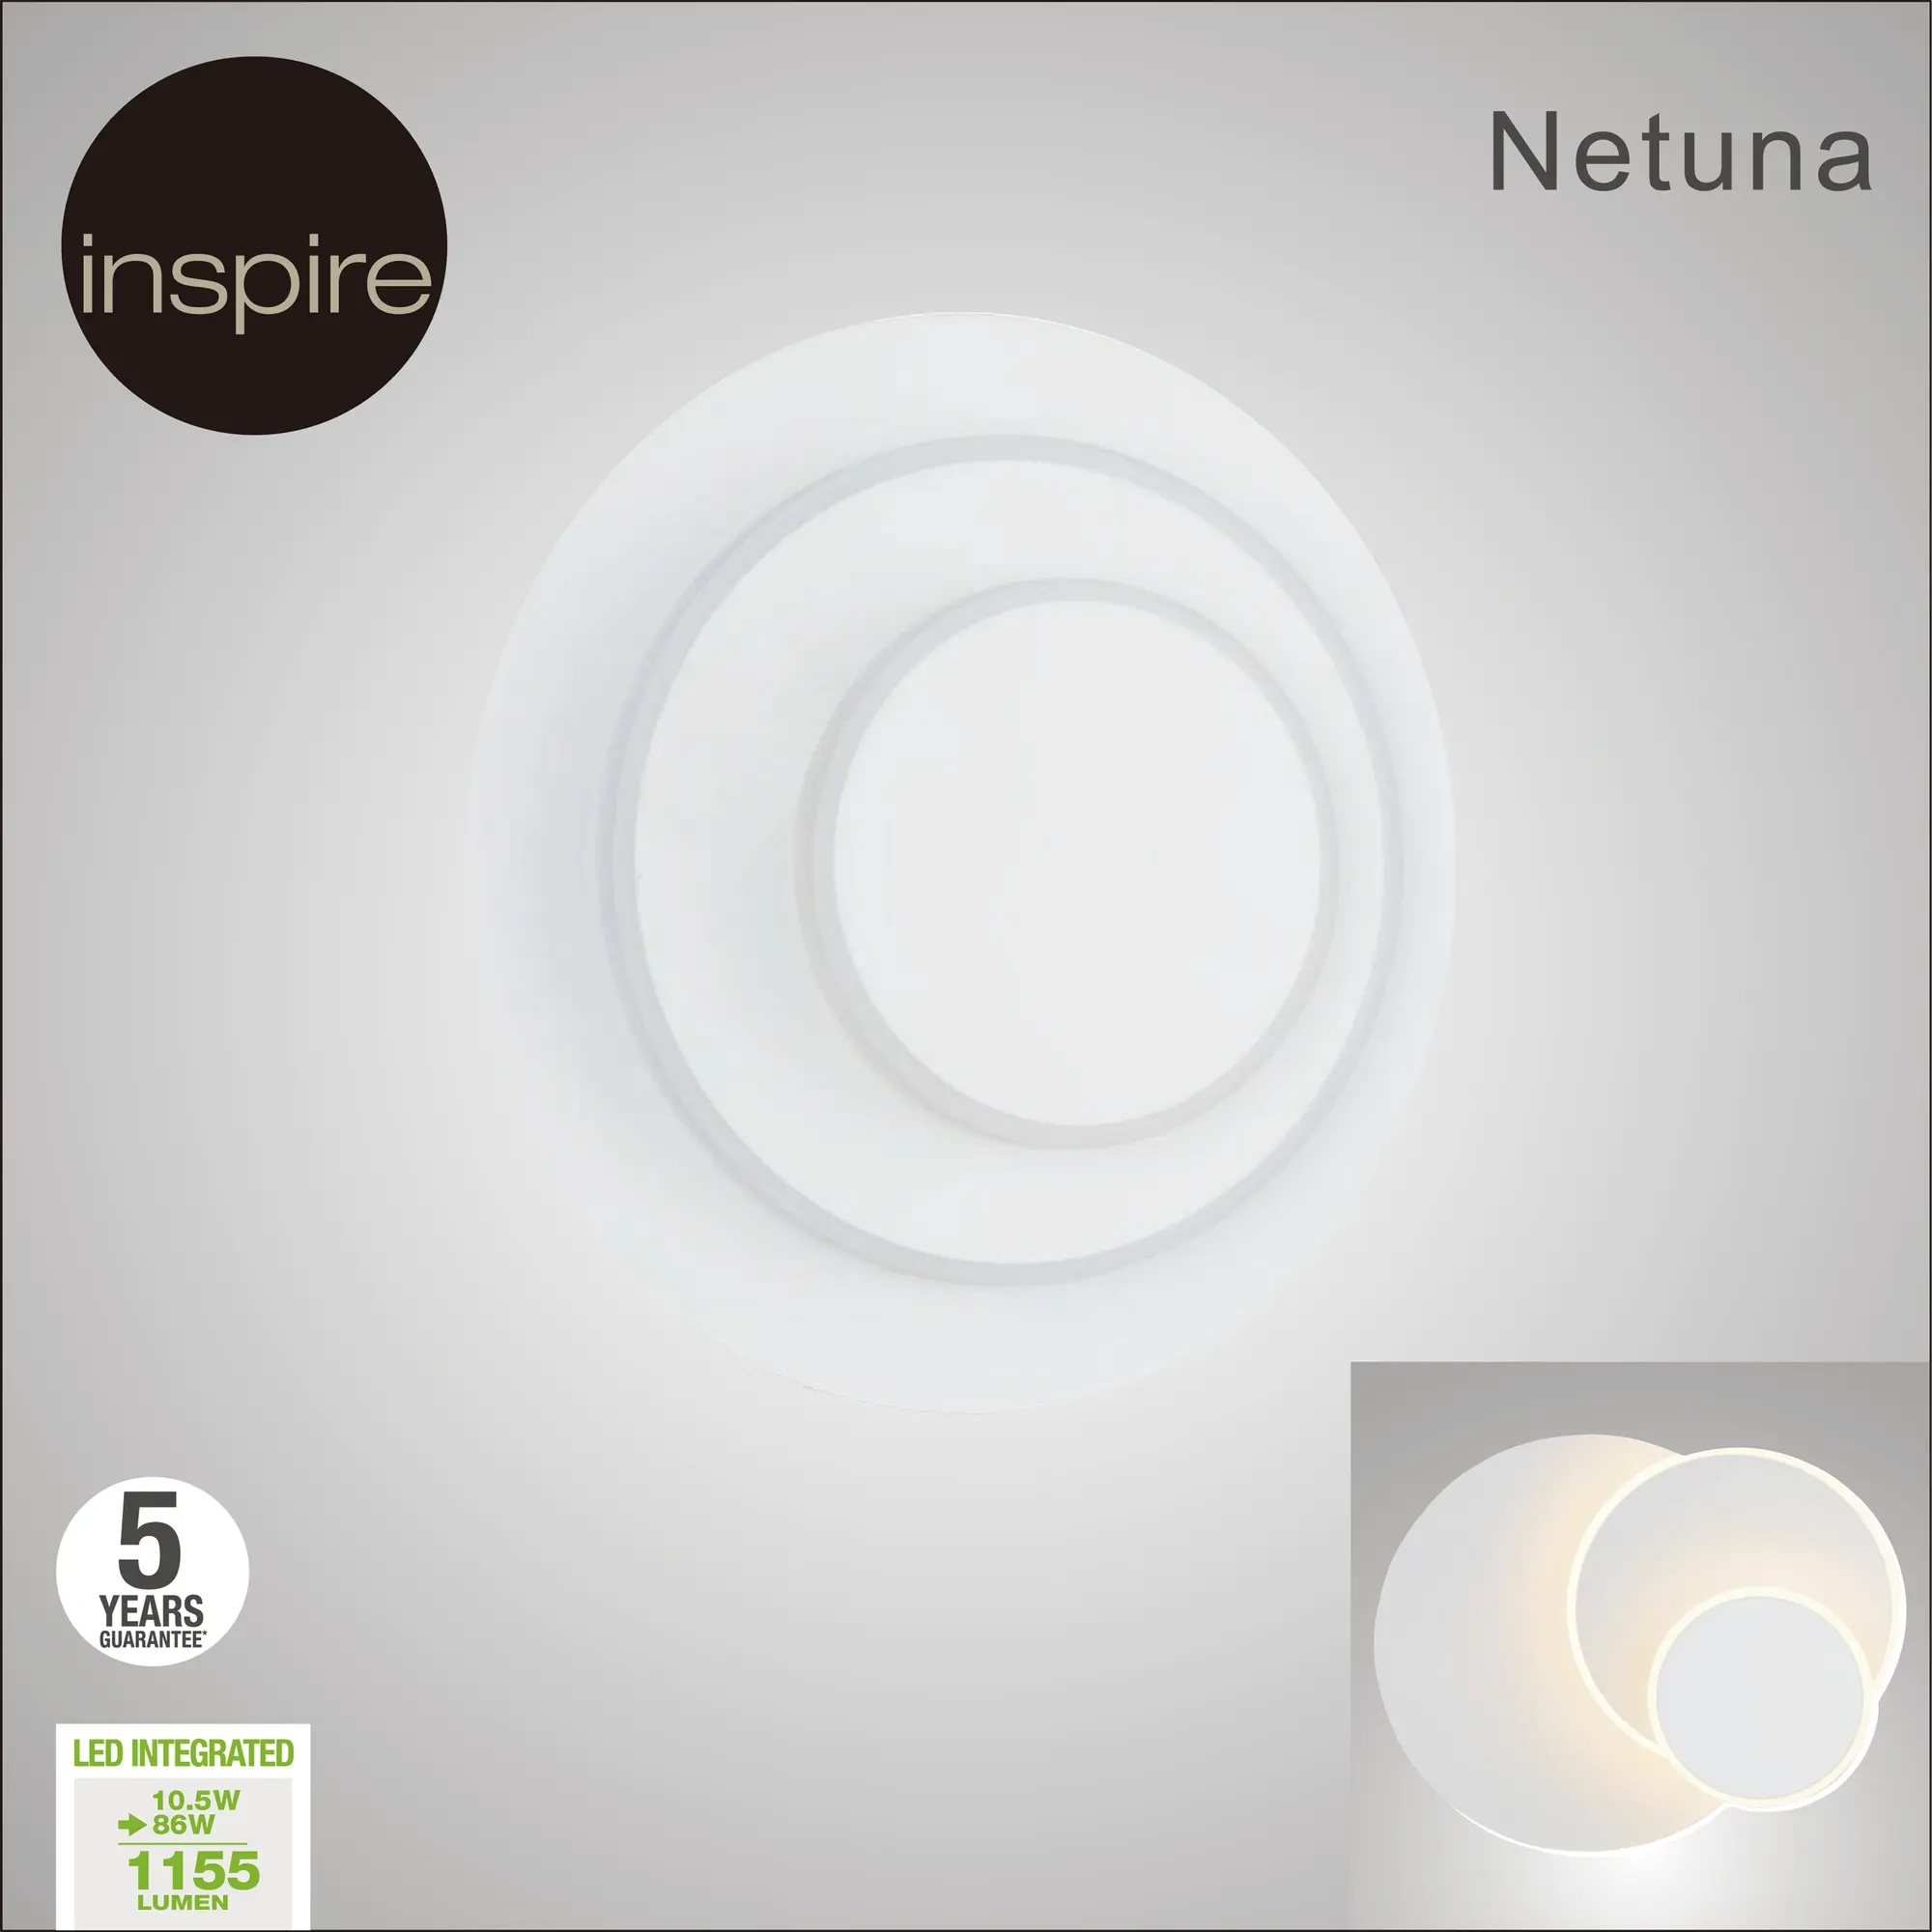 Applique Netuna bianco, in metallo, D. 23.5 cm 23.5x18 cm, INSPIRE - 2